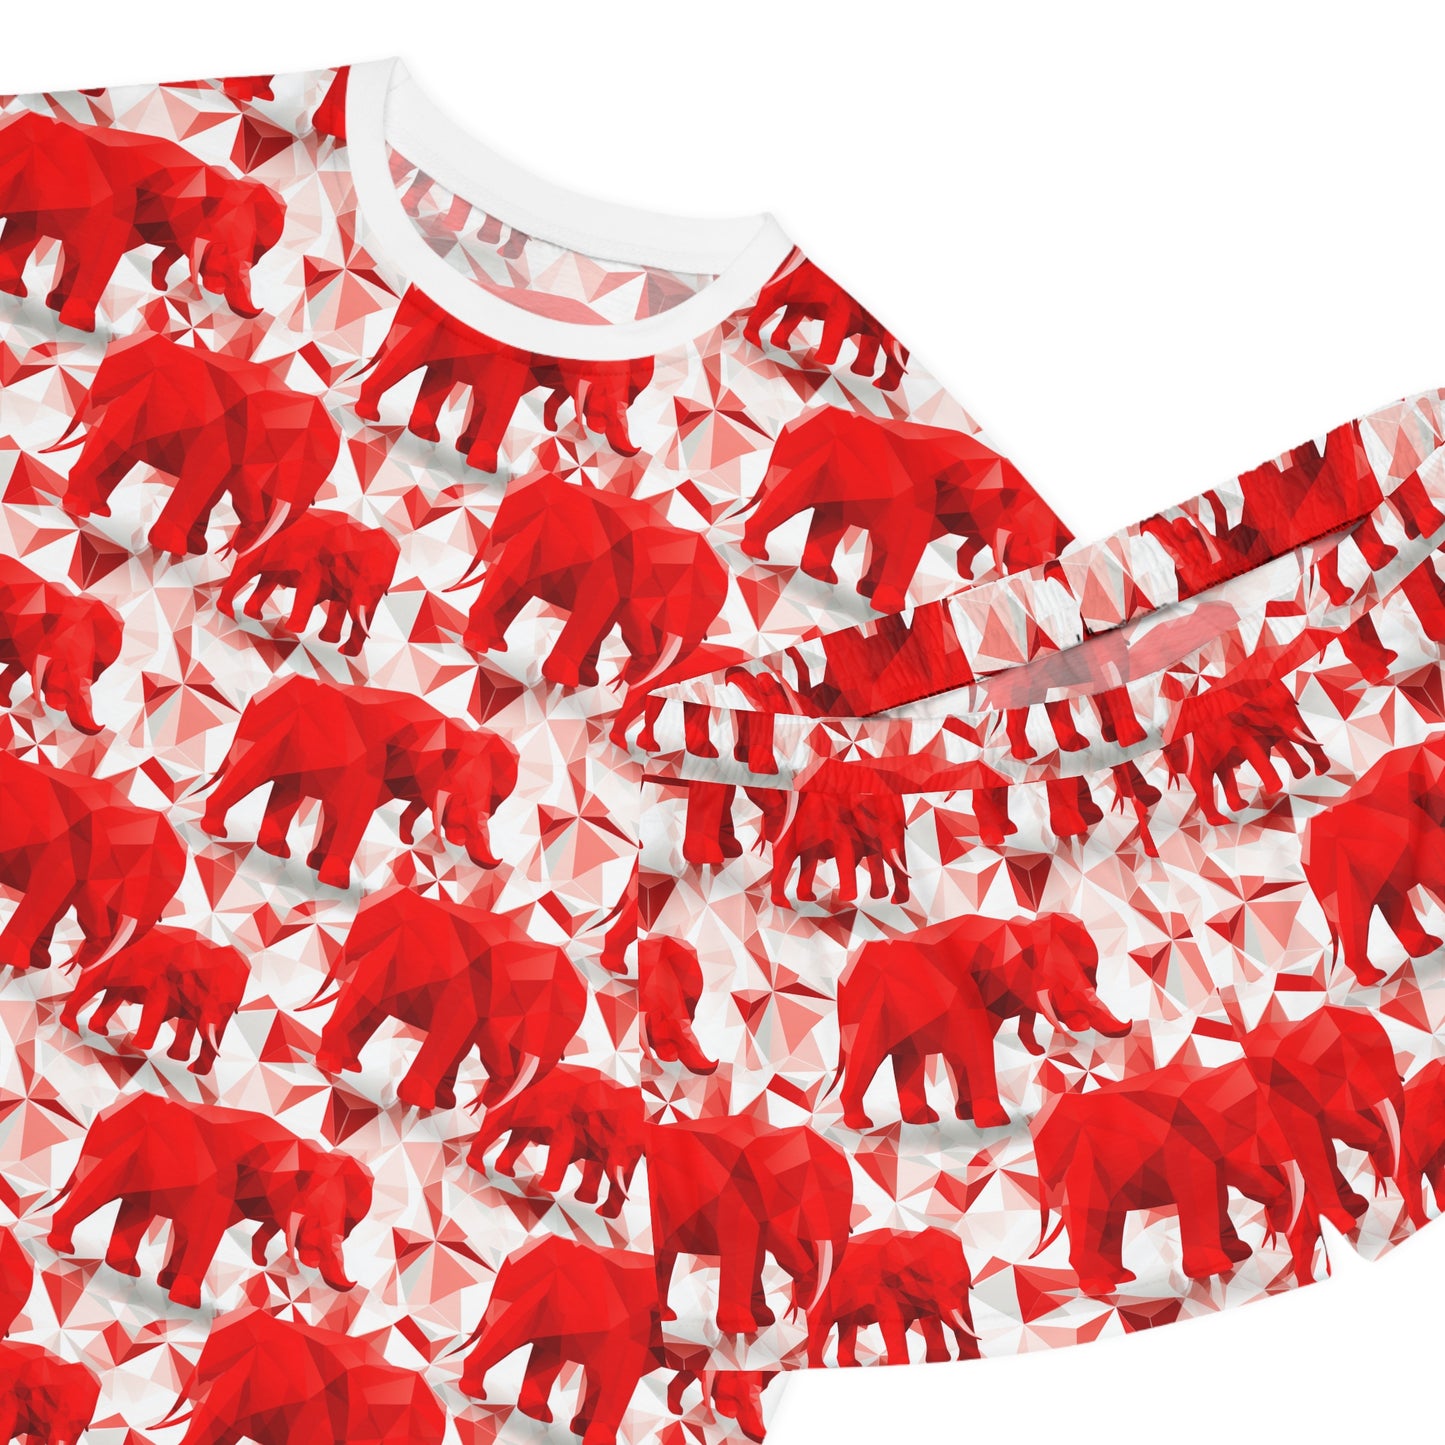 Elephants & Pyramids Women's Short Pajama Set